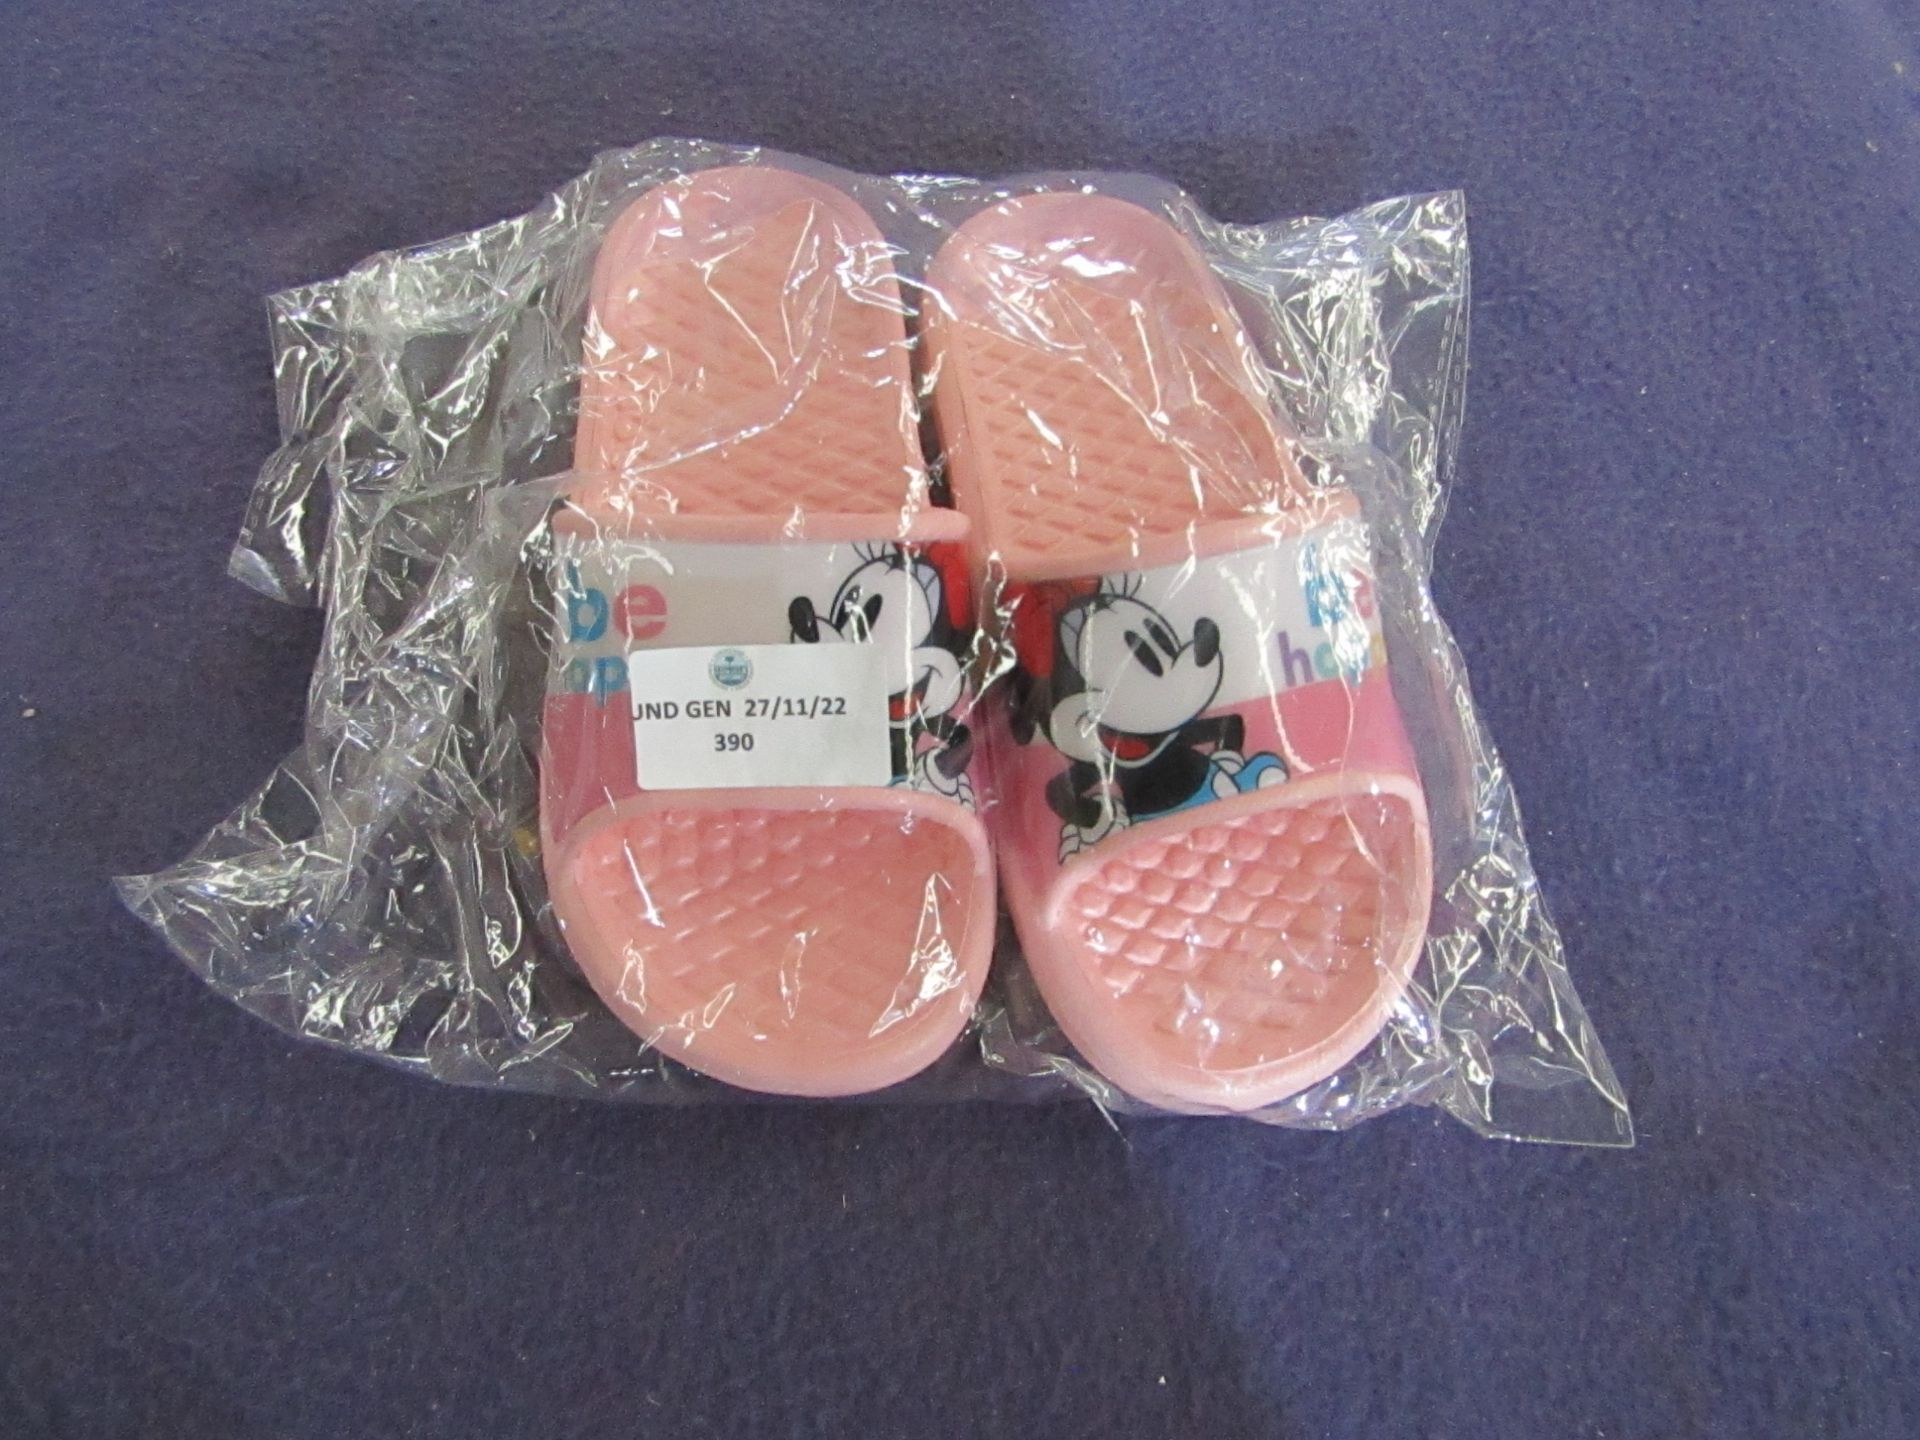 Minnie Mouse - Pink Slidders - Size 26/27 - Unused & Packaged.